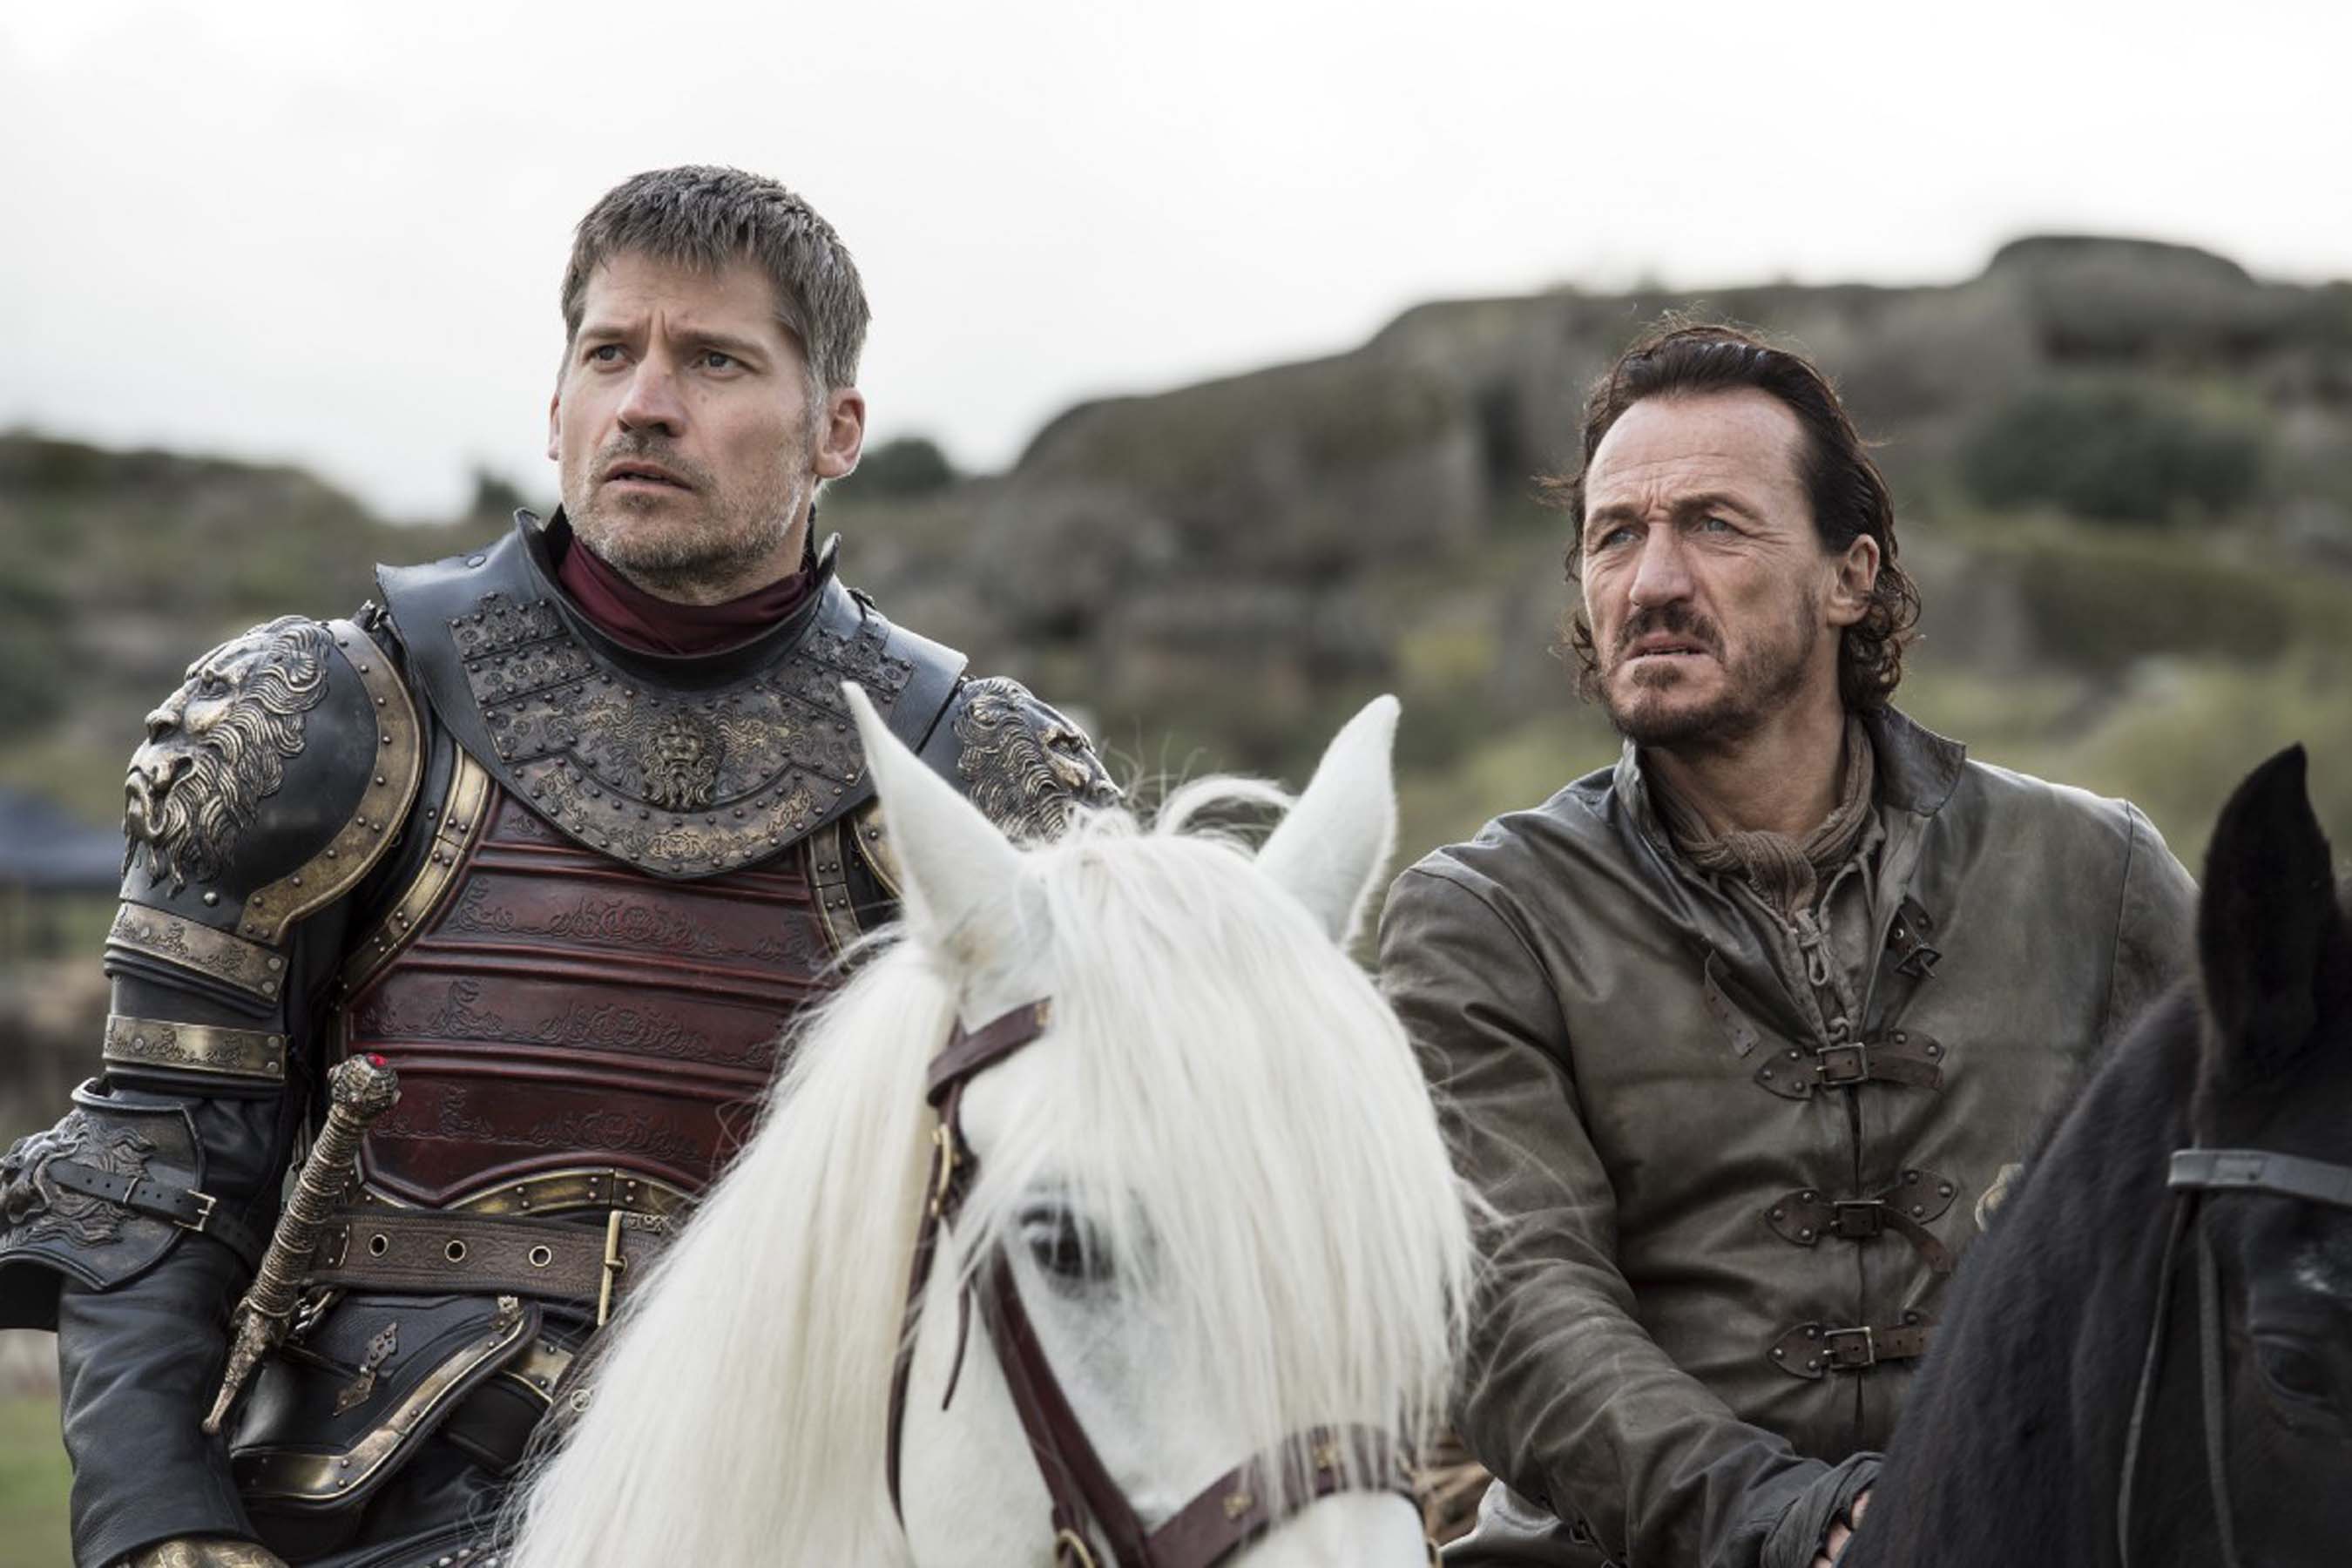 Jamie and Bronn prepare to face the Dothraki